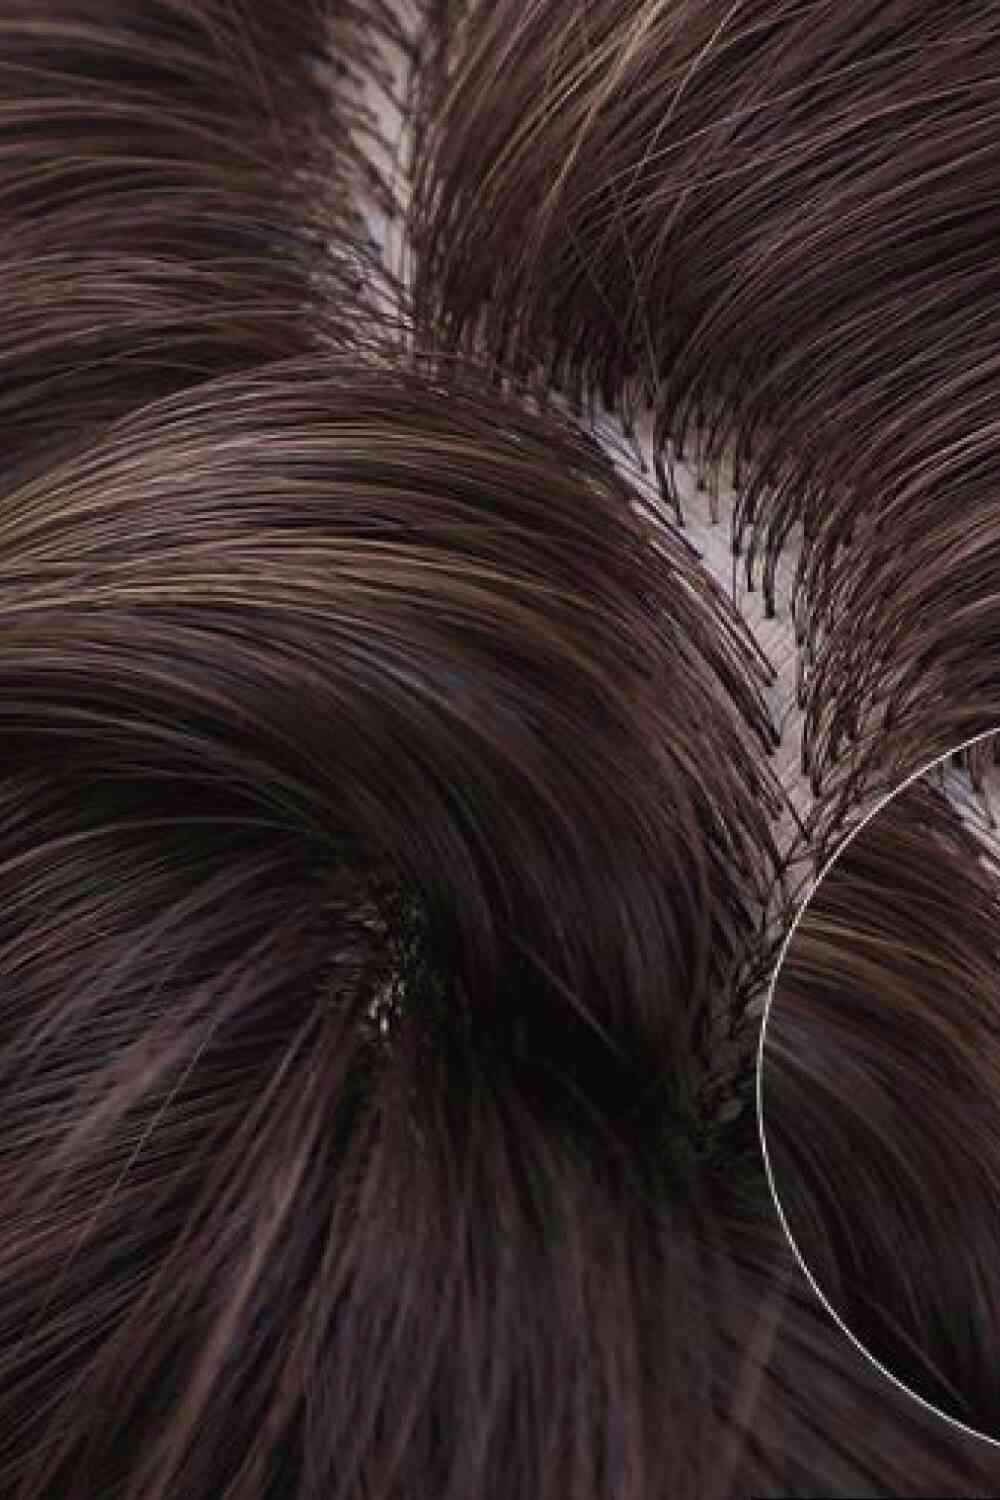 Elegant Wave Full Machine Synthetic Wigs in Purple 26'' - TRENDMELO